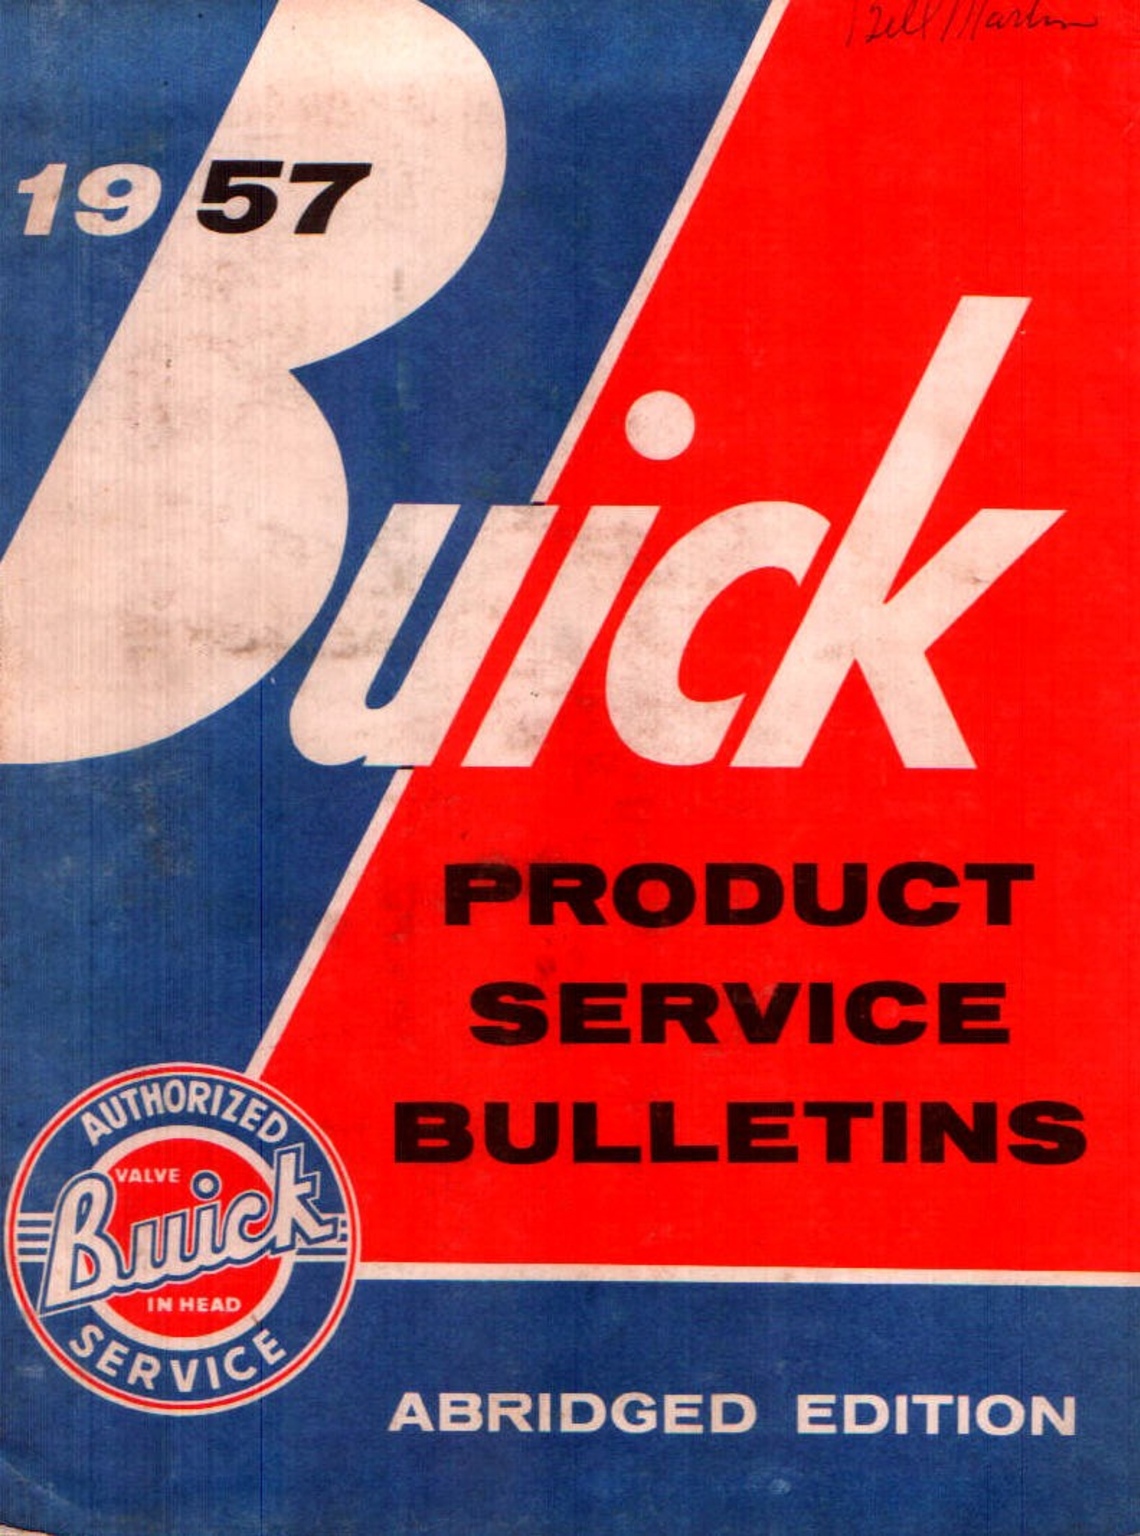 n_1957 Buick Product Service  Bulletins-001-001.jpg